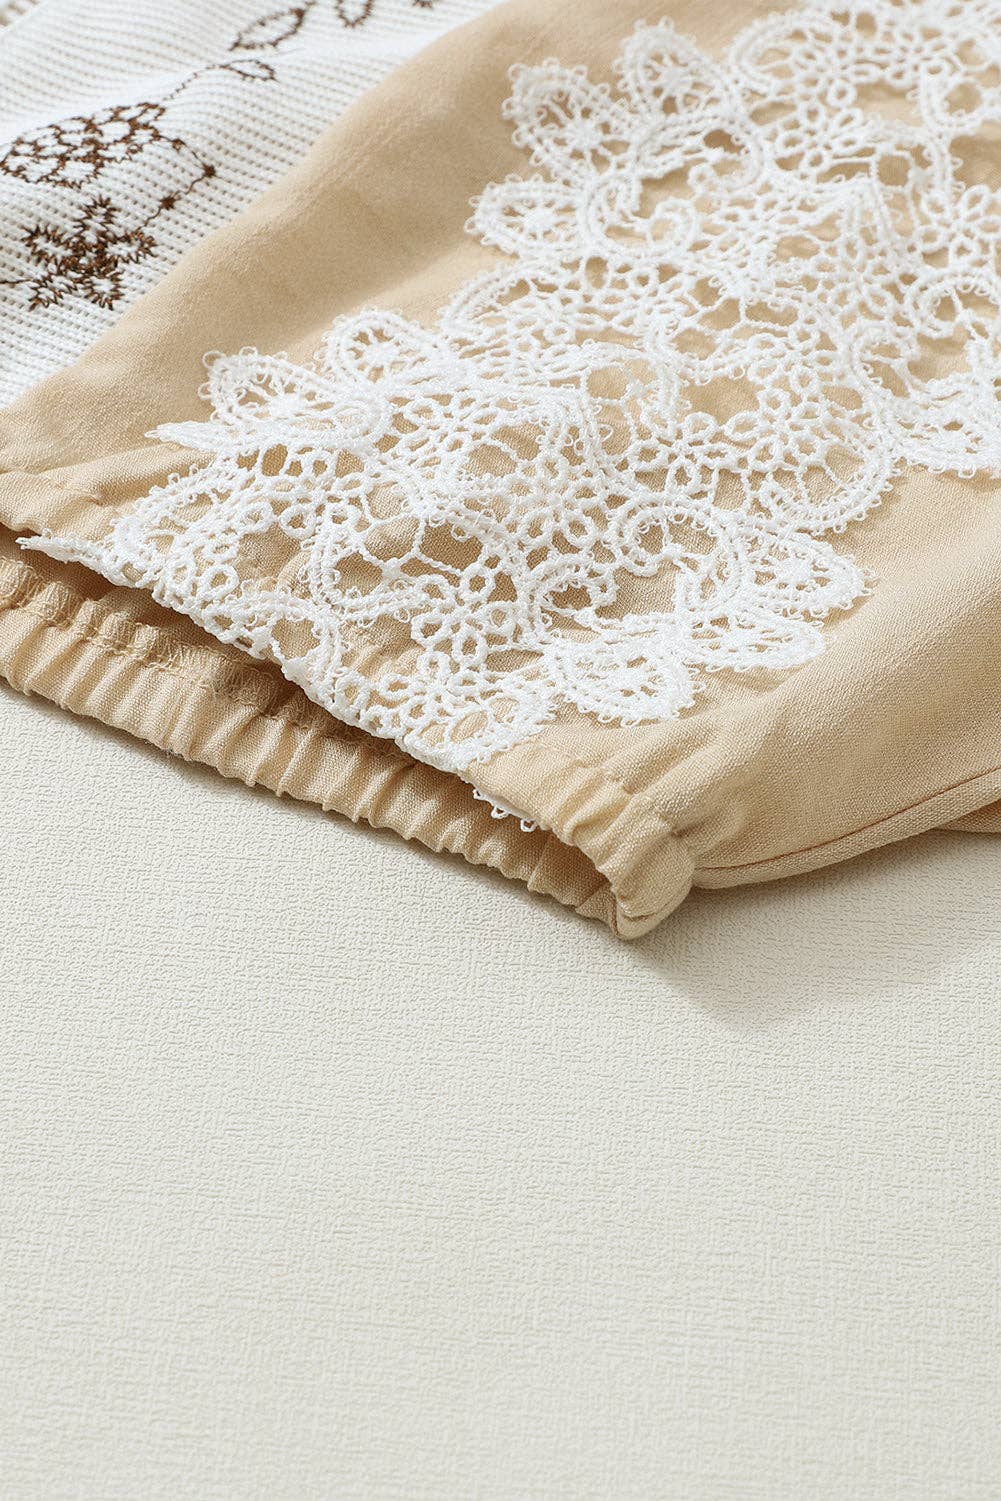 Lovesoft - Golden Fleece Lace Crochet Patchwork Slit Sleeve Loose Blouse